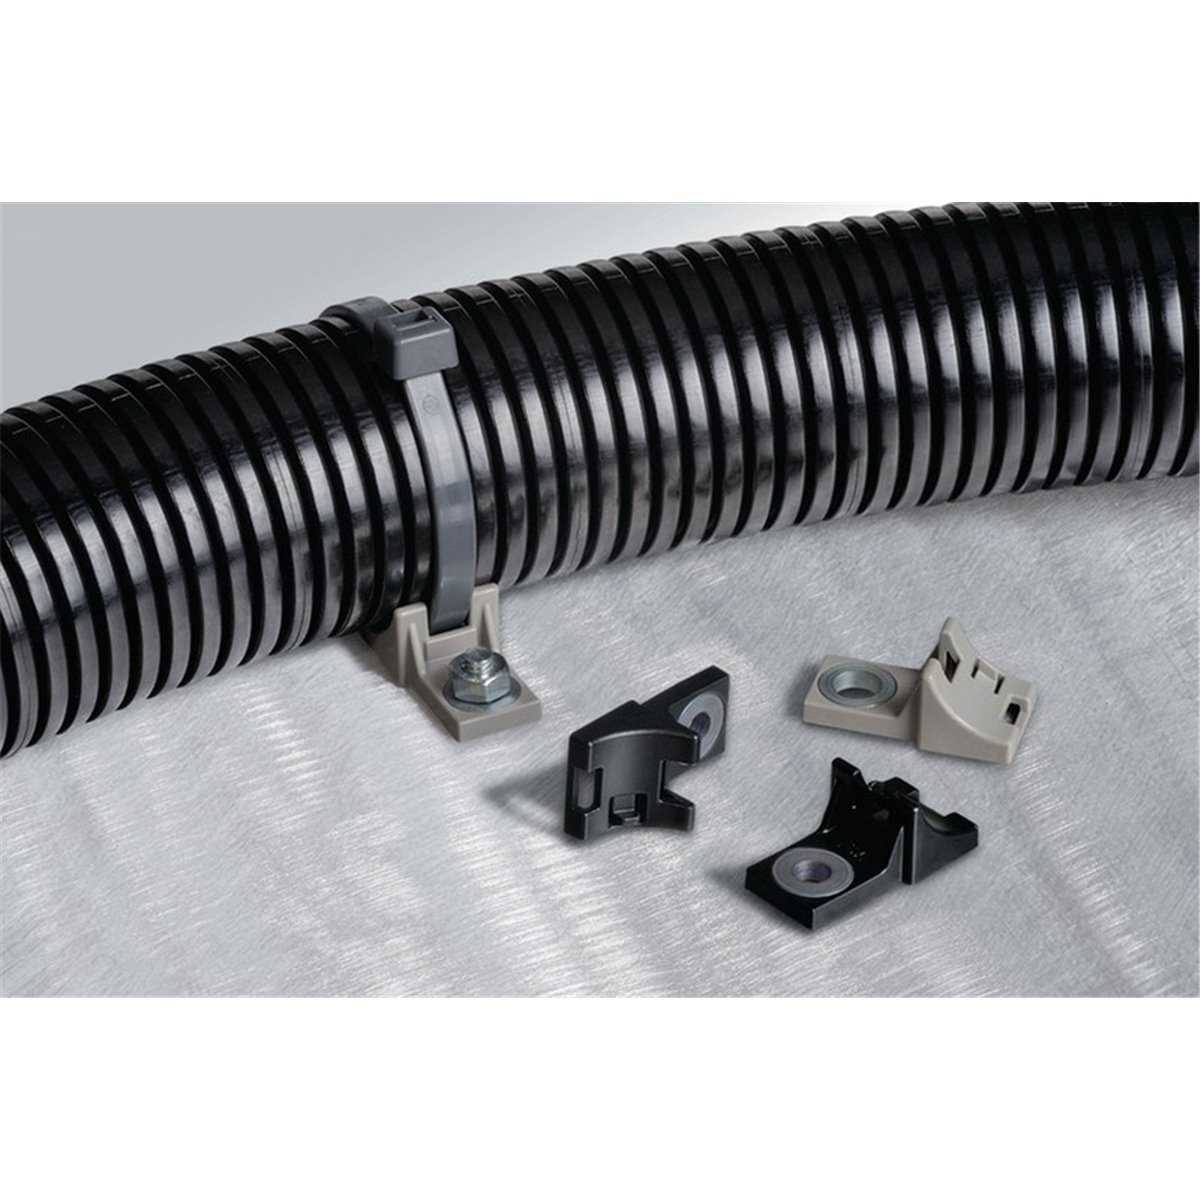 Fixing cable tie T50RHDM8-PA66HIRHS-BK HellermannTyton, black, 100 pcs.